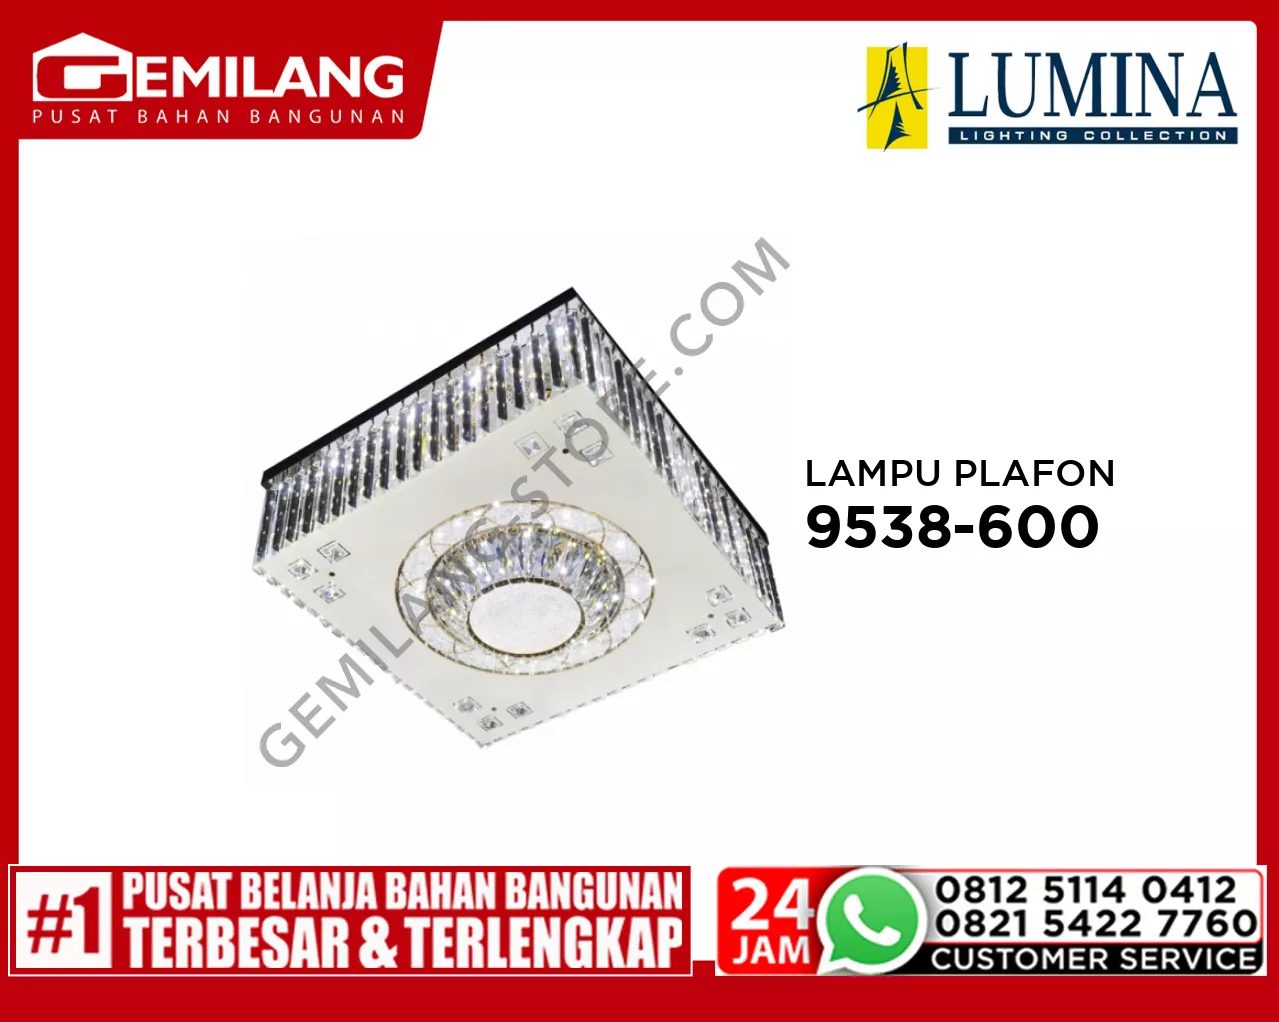 LAMPU PLAFON 9538-600 x 600 MP3 CH